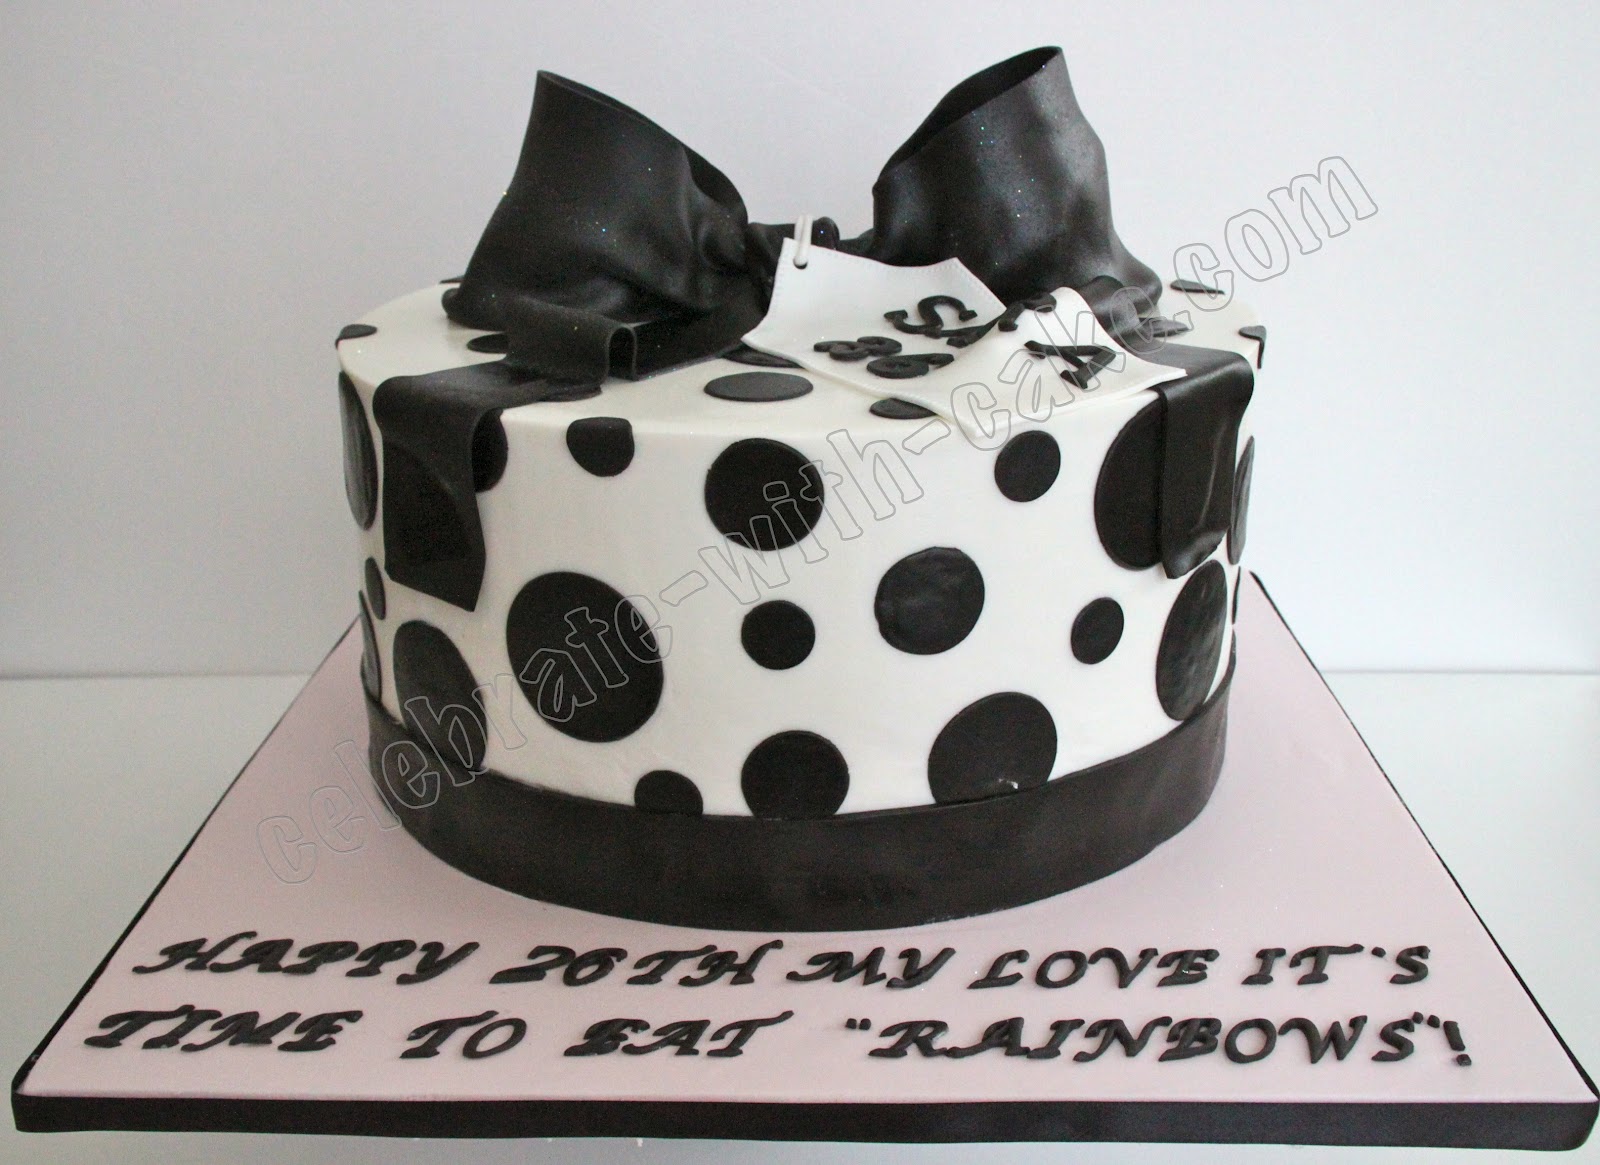 Black and White Polka Dot Birthday Cake